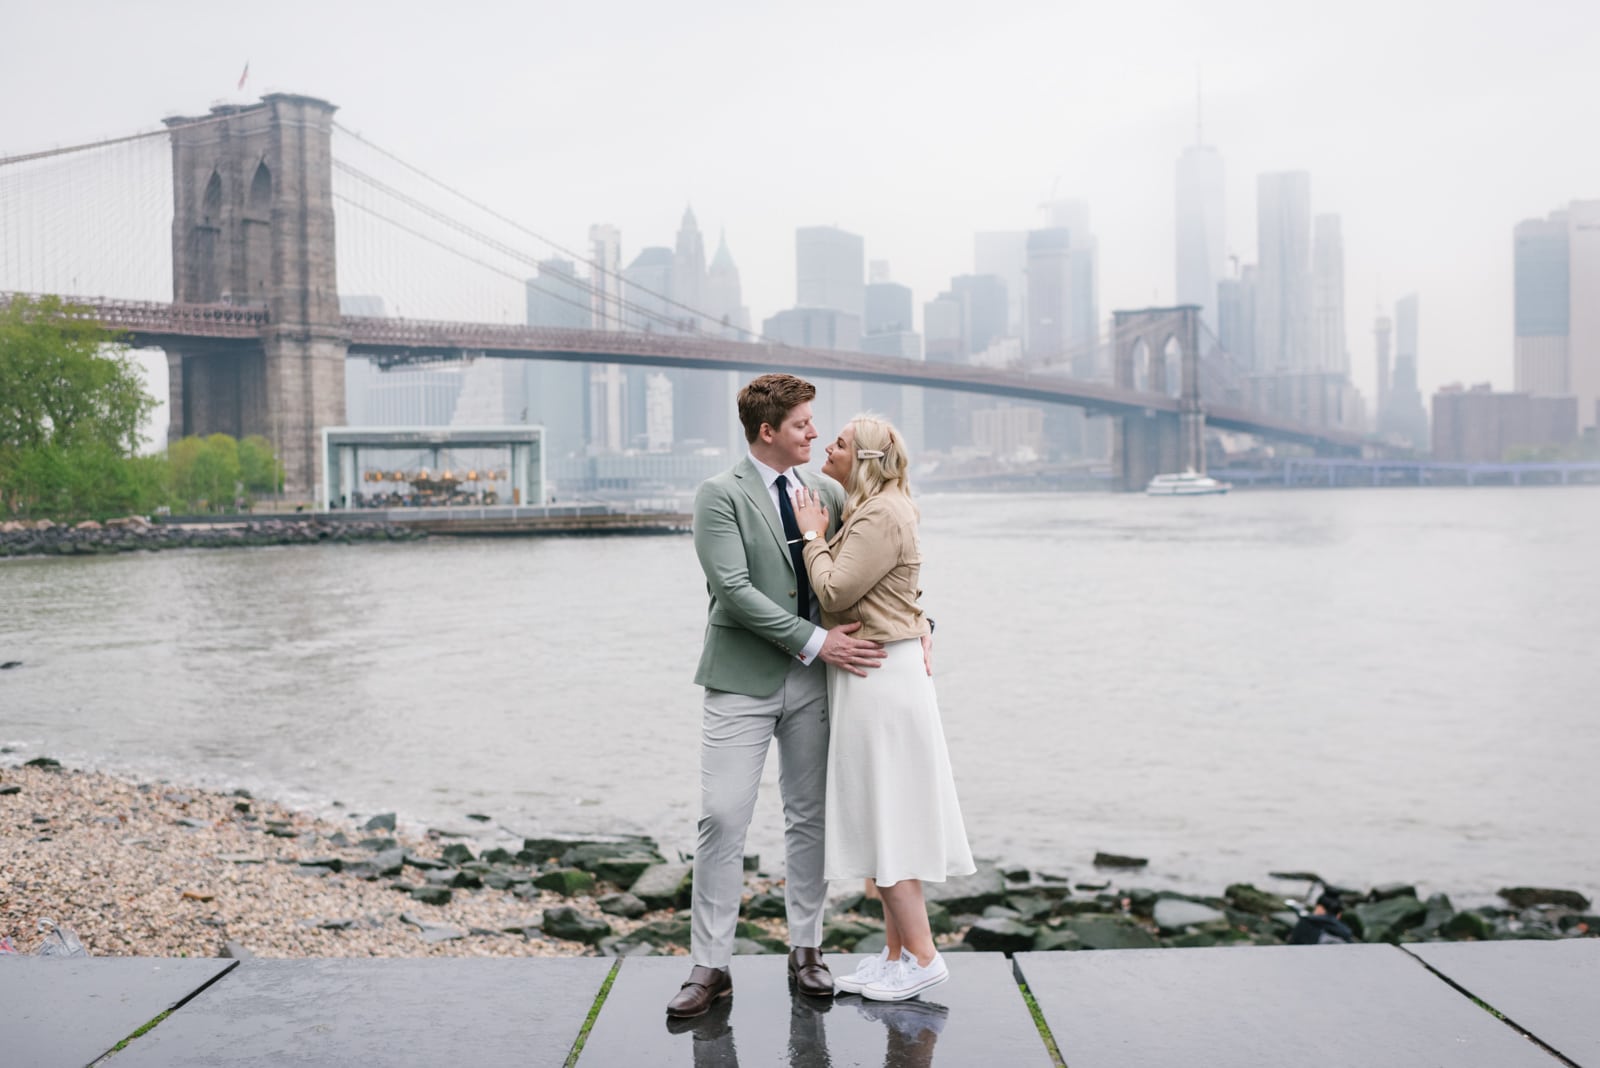 Brooklyn Bridge Park elopement and rainy day wedding in NYC. Photos by Brooklyn wedding photographer Everly Studios, www.everlystudios.com